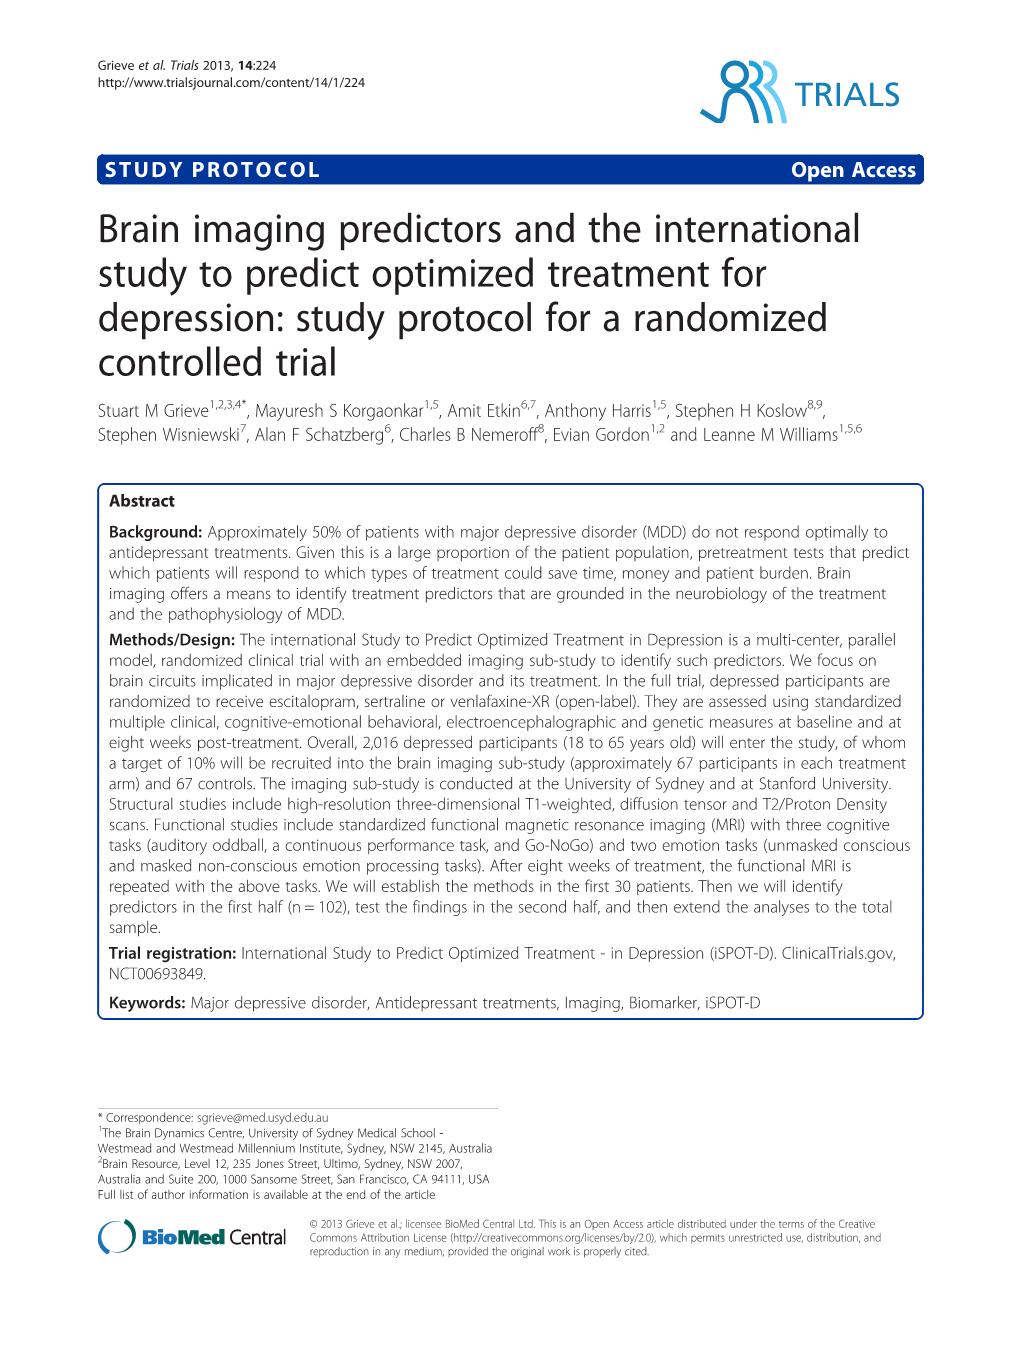 Brain Imaging Predictors and the International Study to Predict Optimized Treatment for Depression: Study Protocol for a Randomi